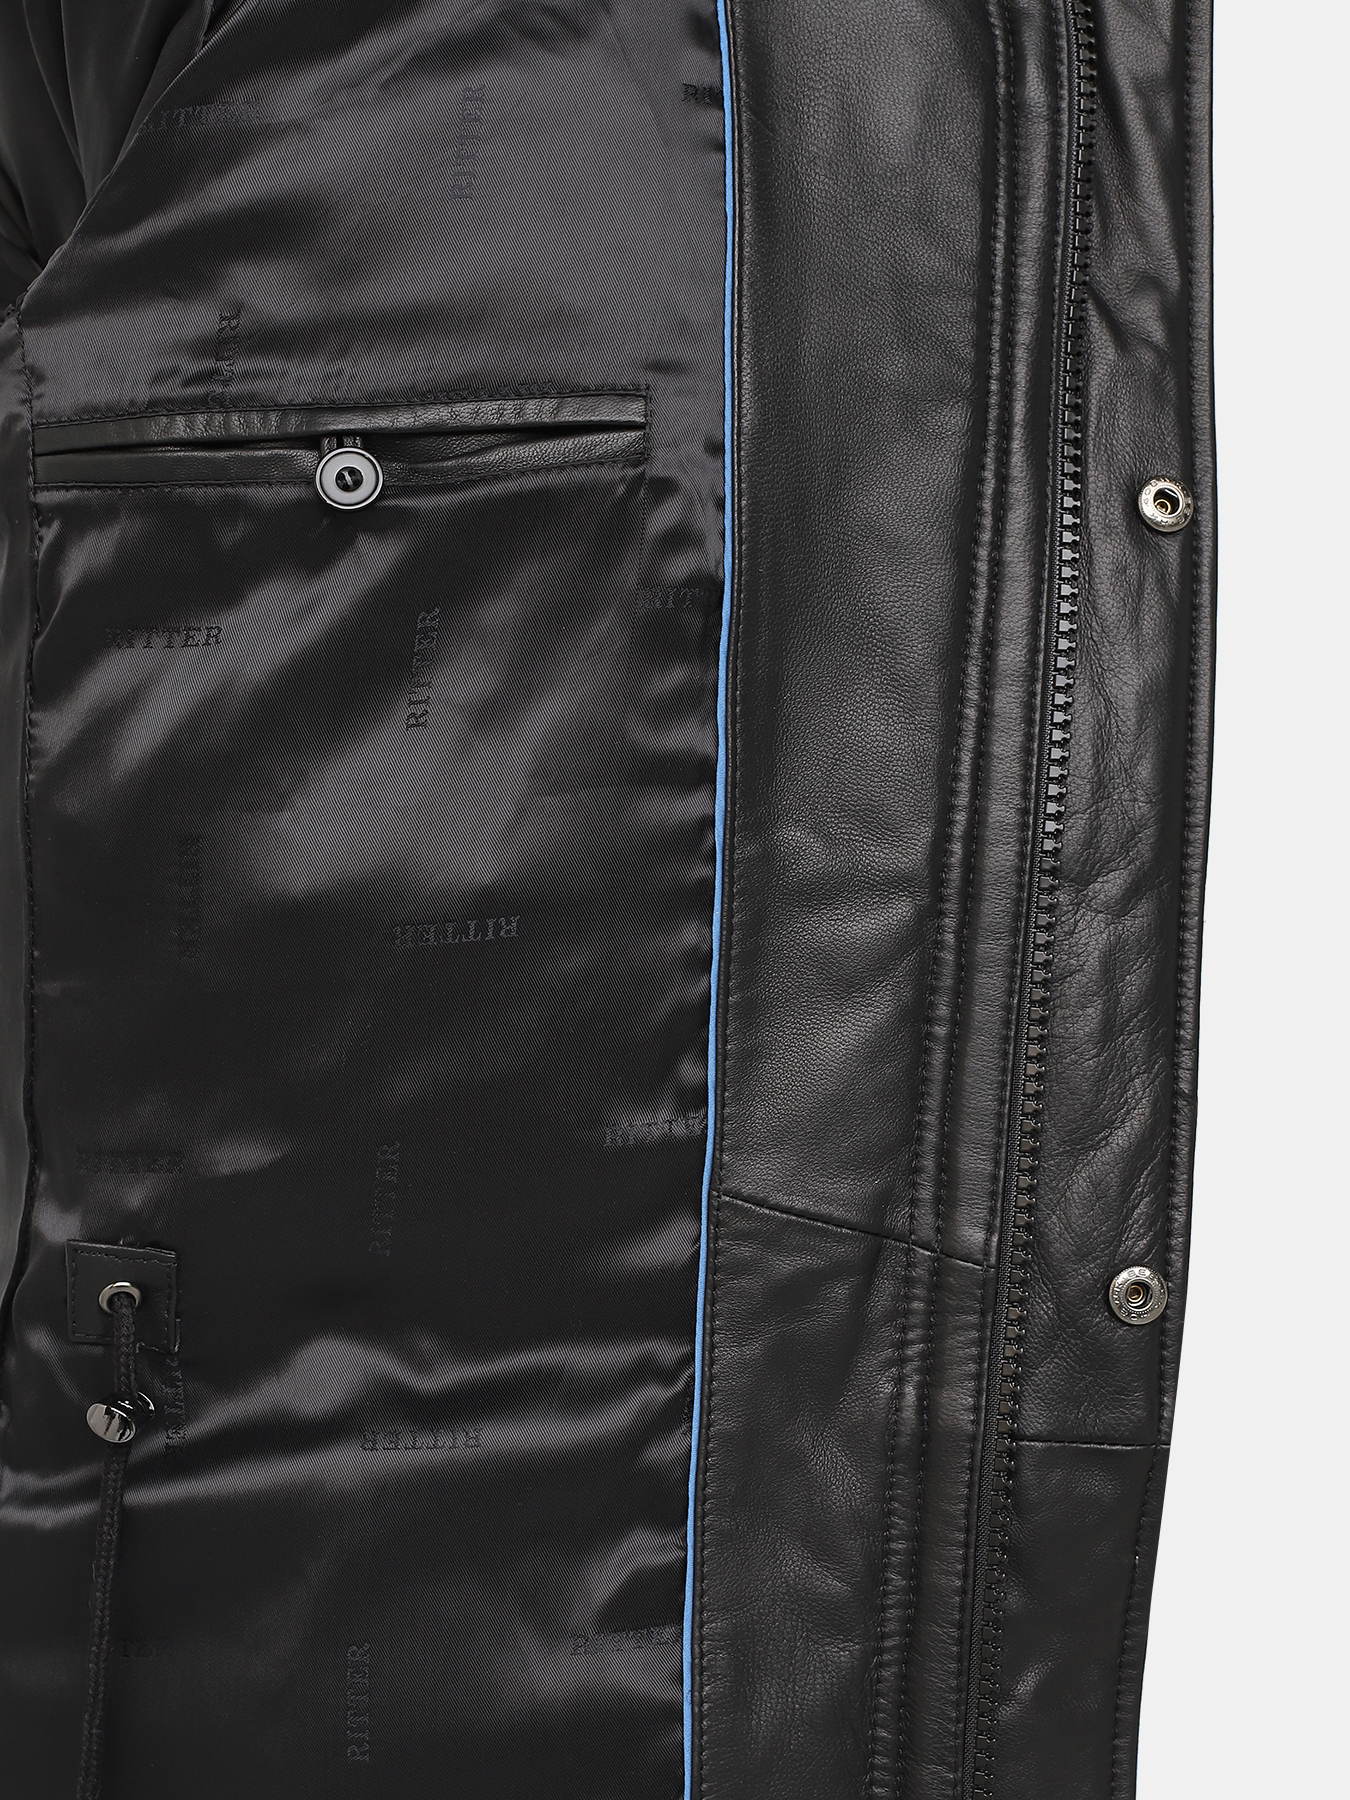 Кожаная куртка Ritter 390990-032, цвет черный, размер 62 - фото 3